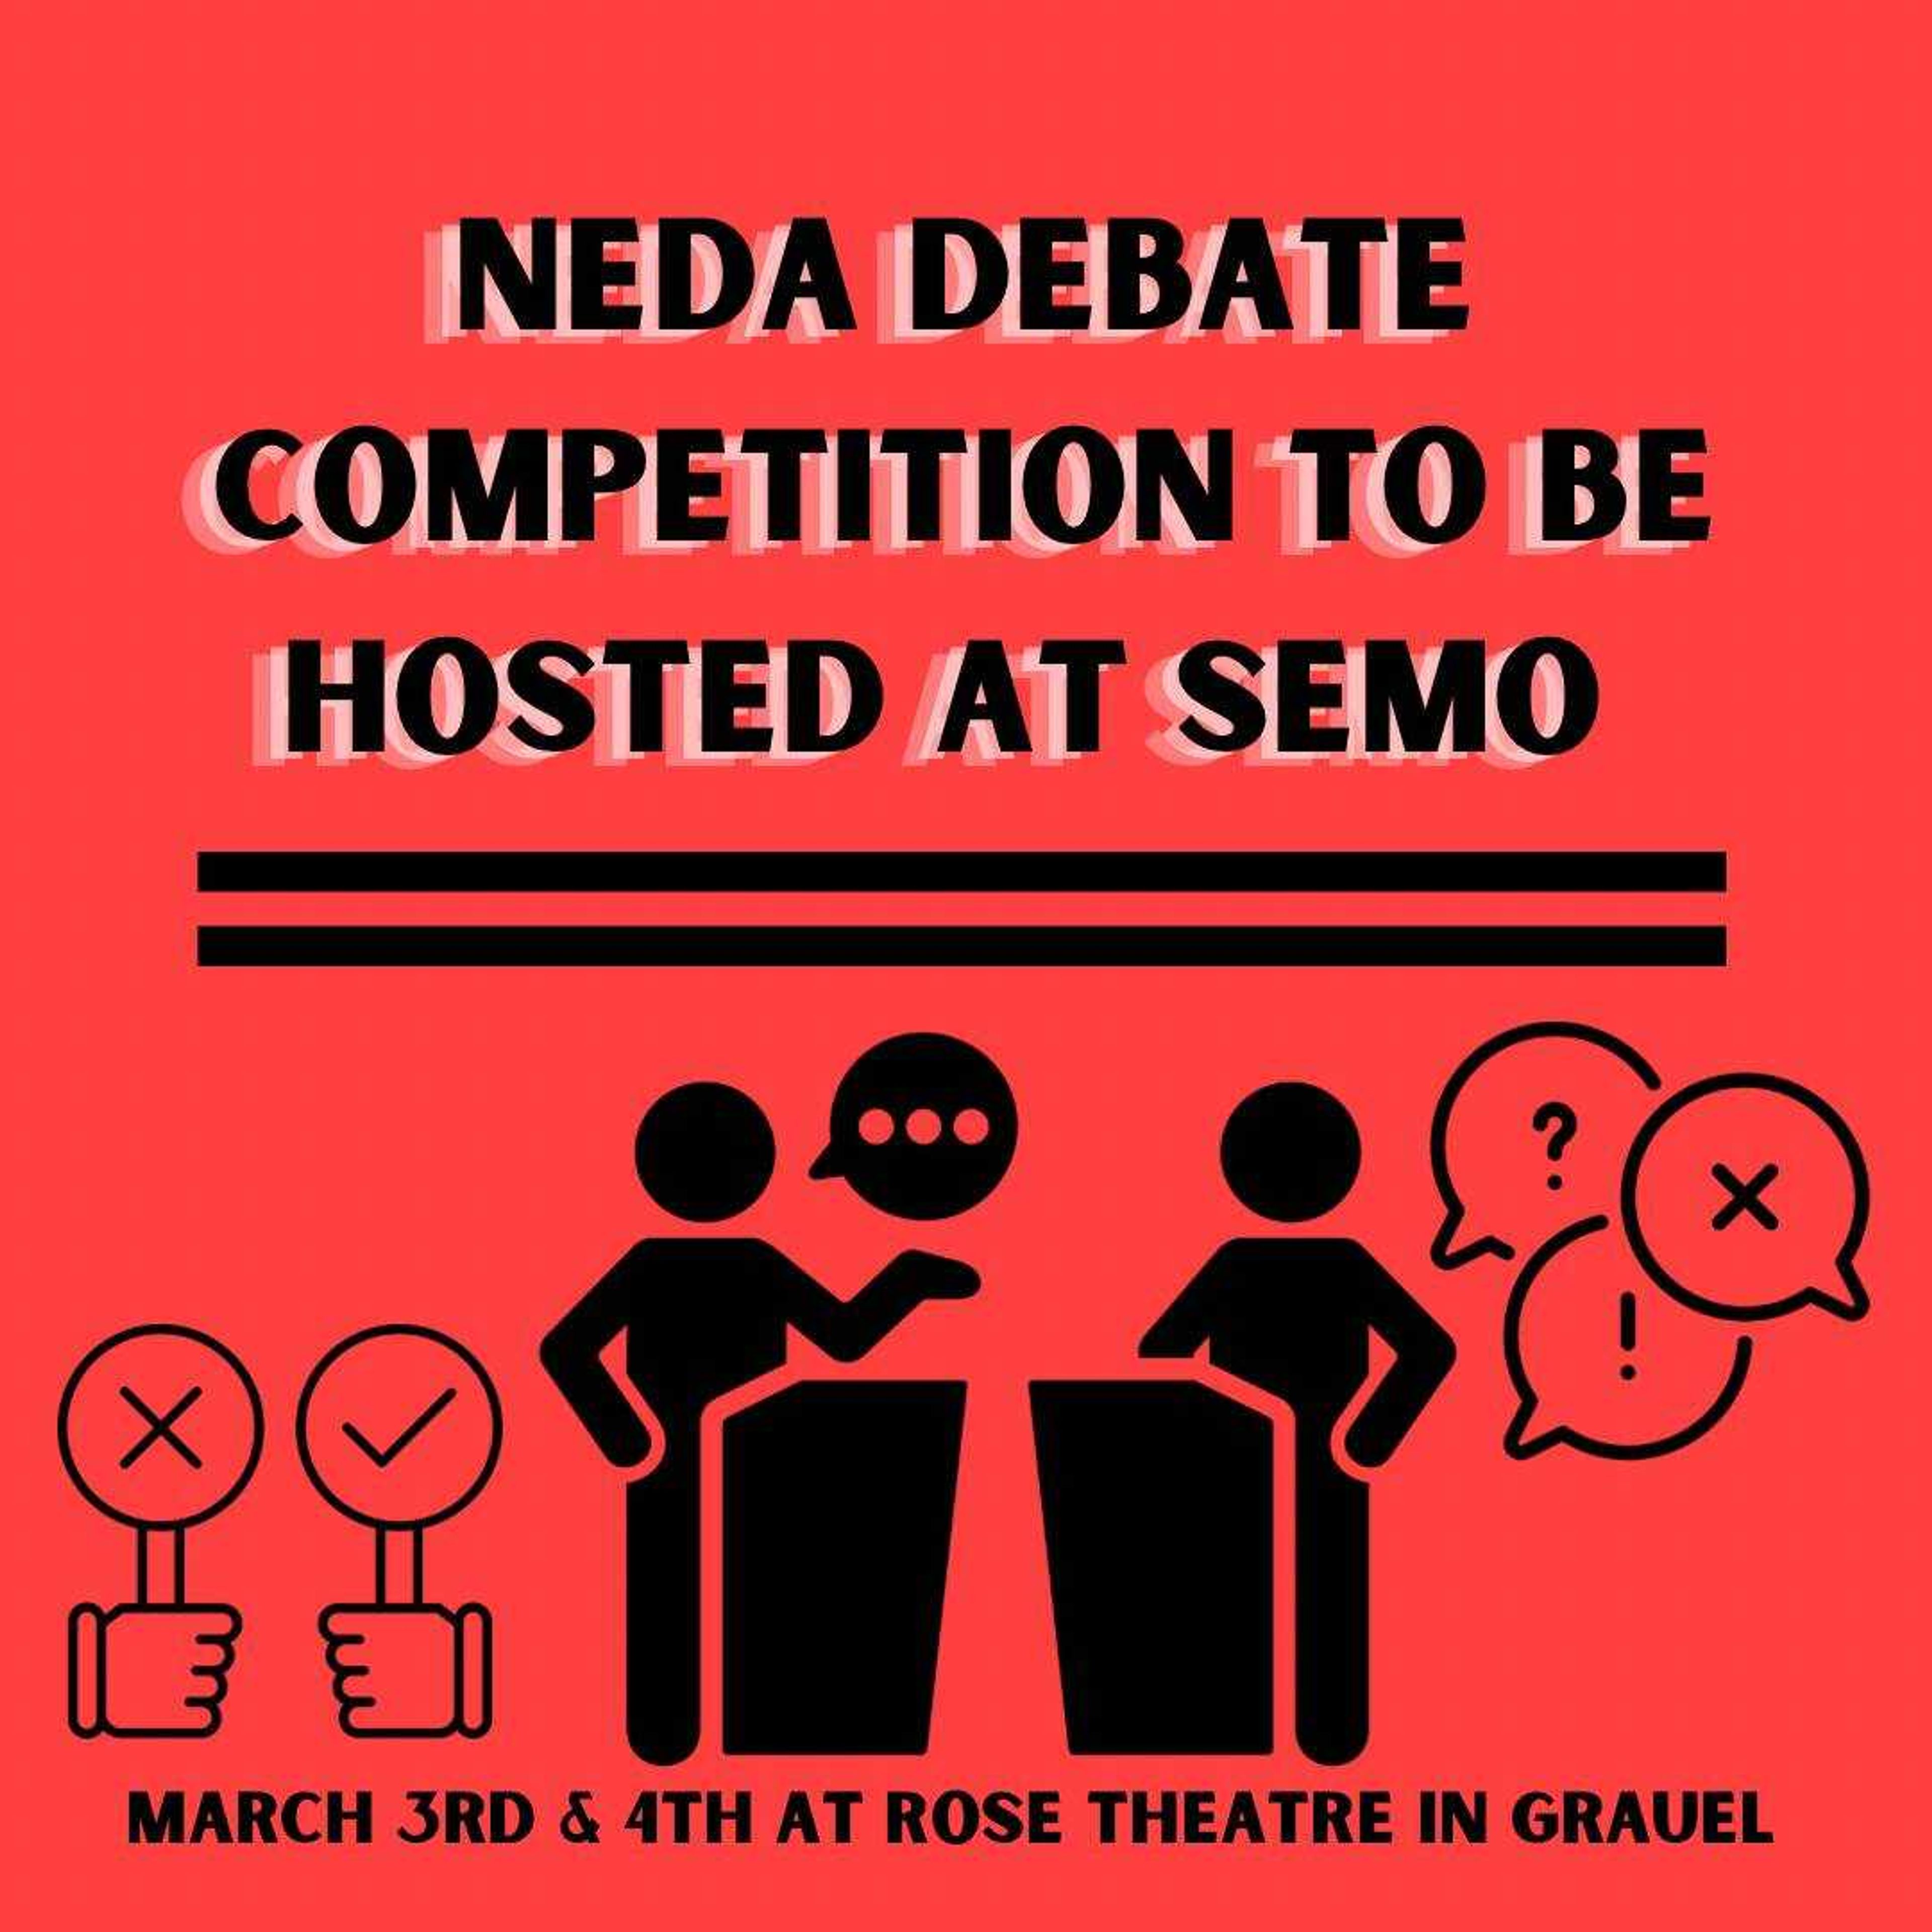 SEMO to host NEDA debate tournament